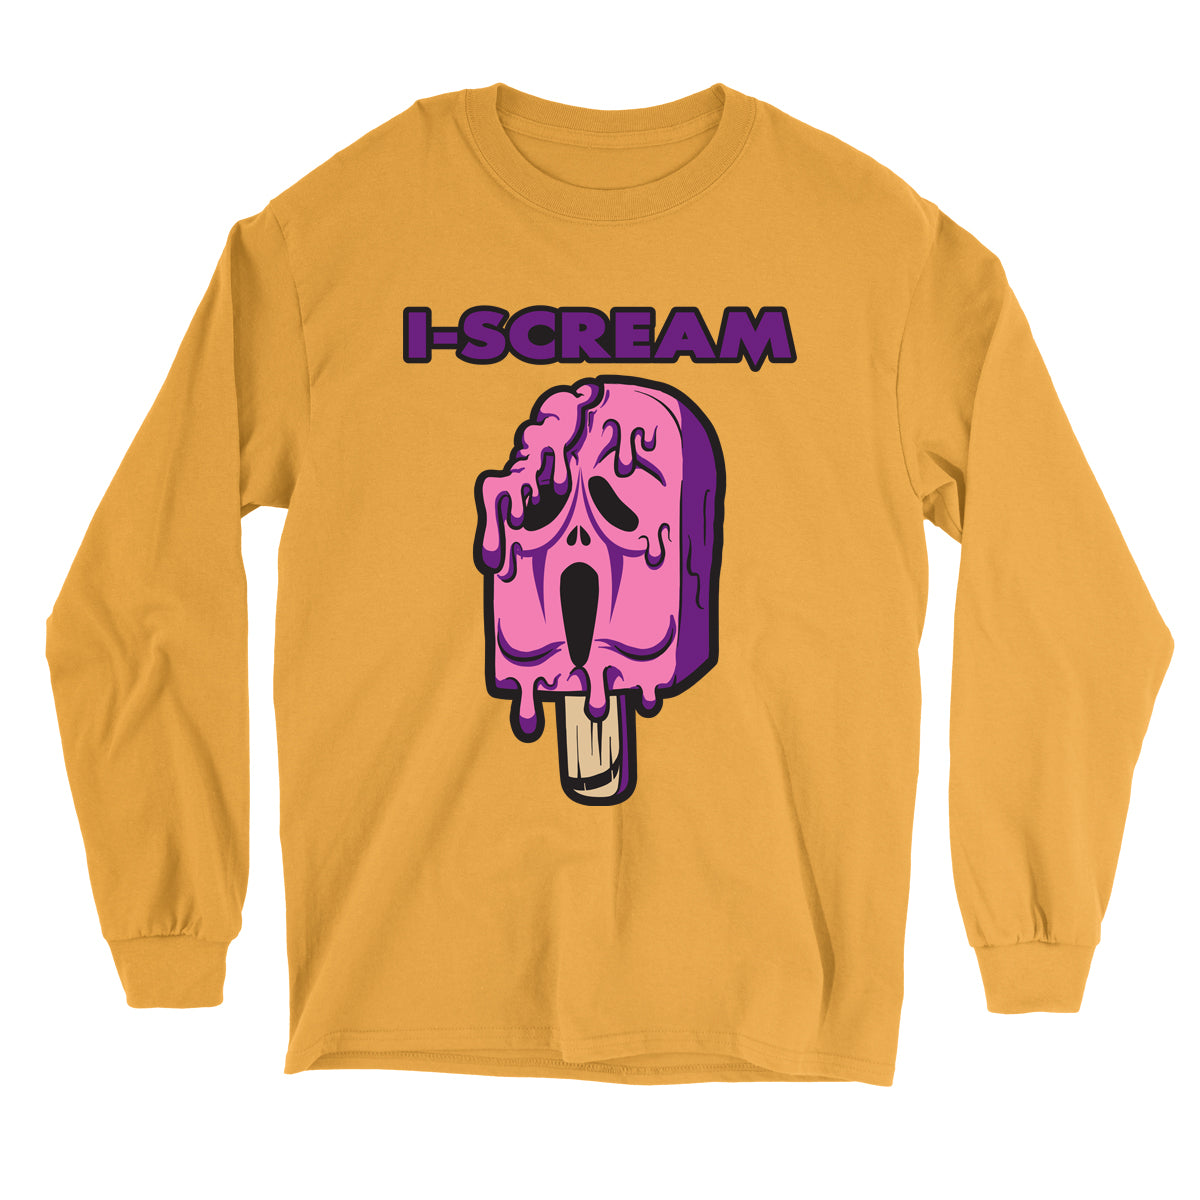 Movie The Food - I-Scream Longsleeve T-Shirt - Gold